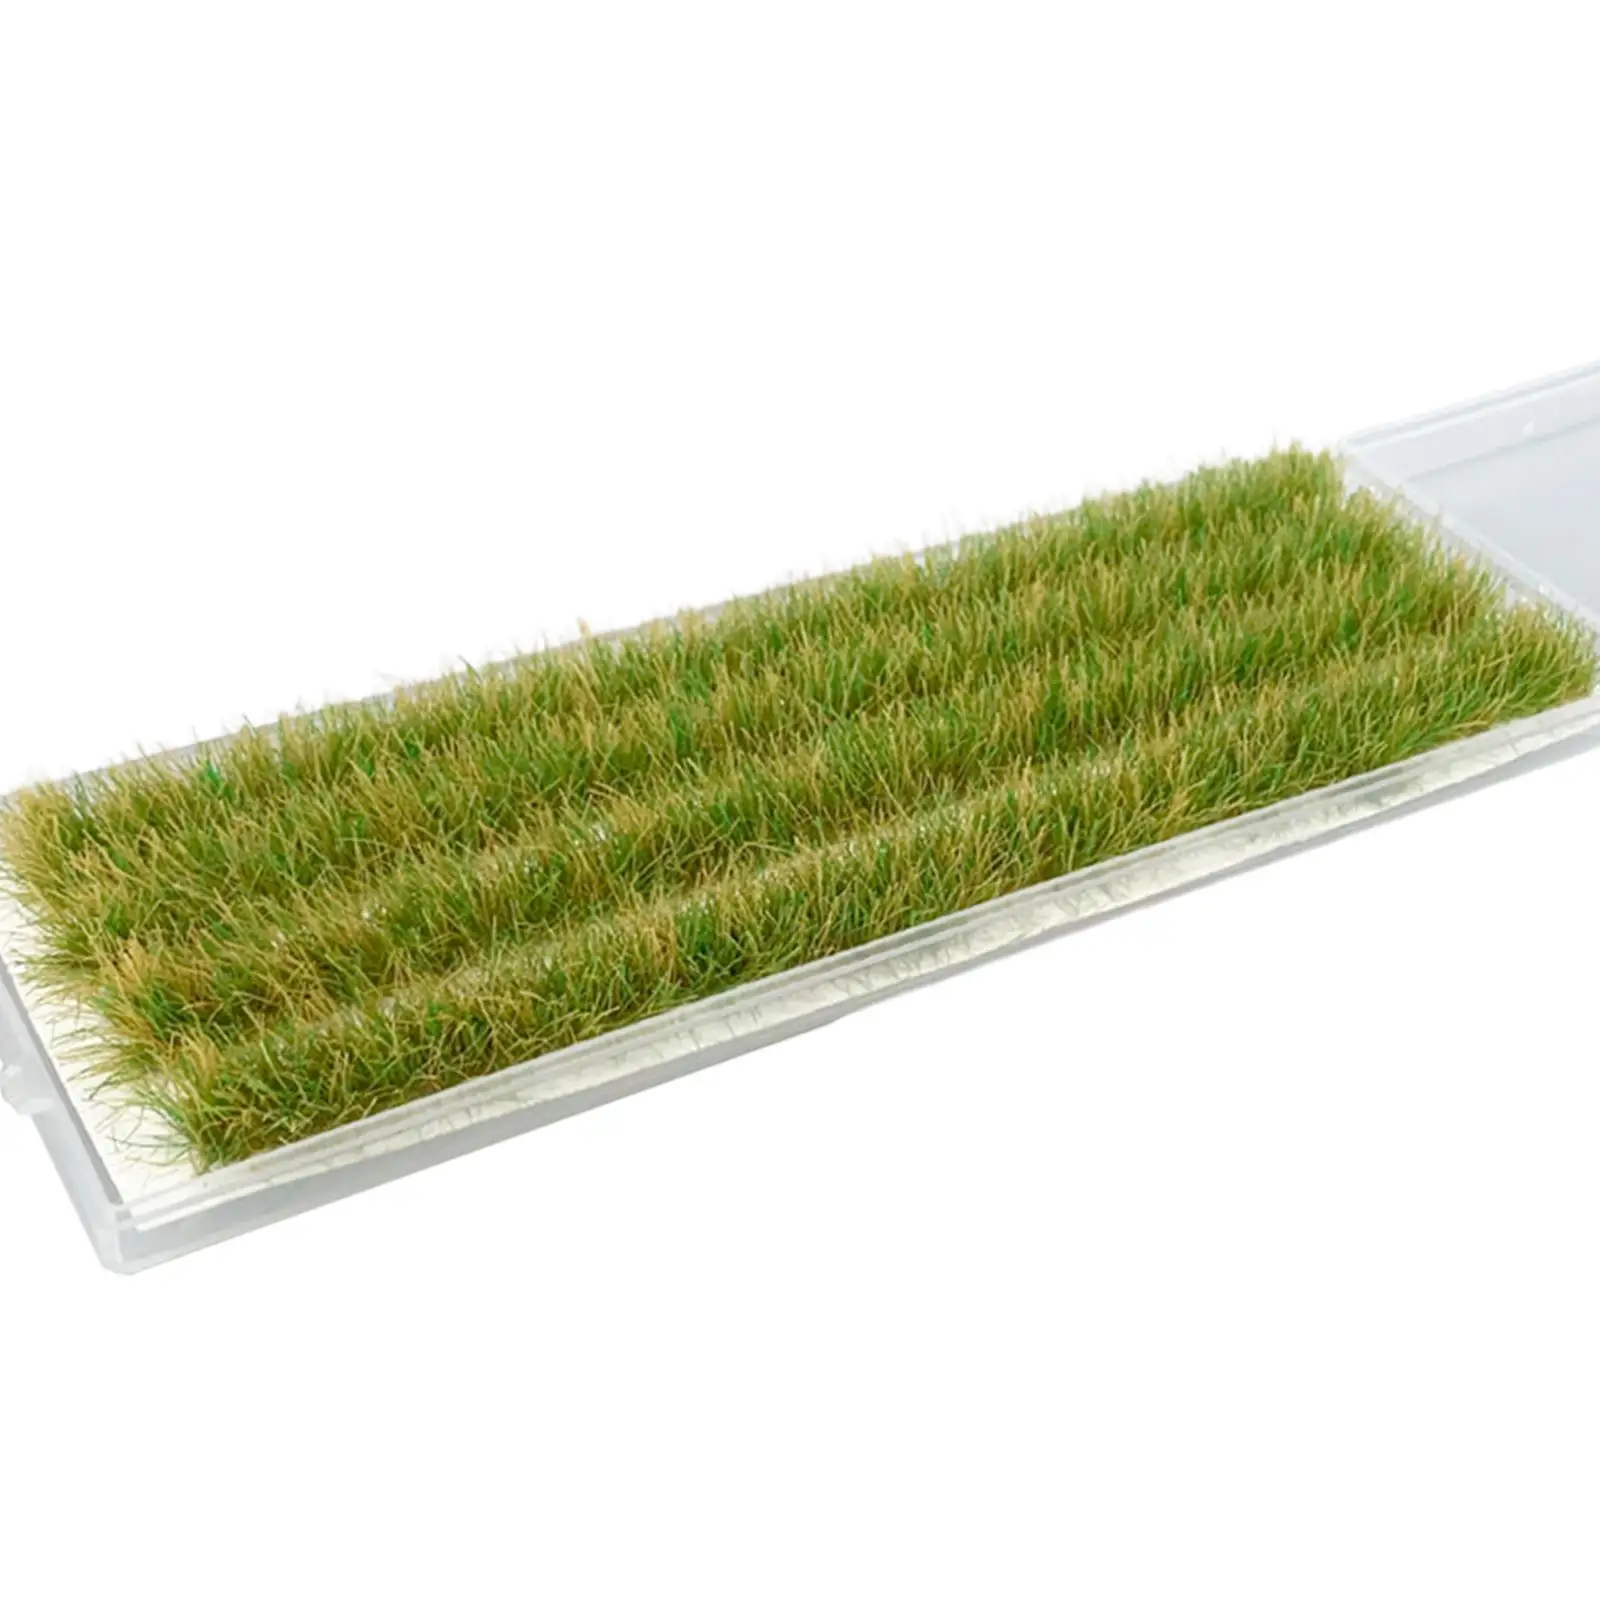 Grass Miniature Grass Strips Model Scene Props Wheat Field Grass Model for Bonsai